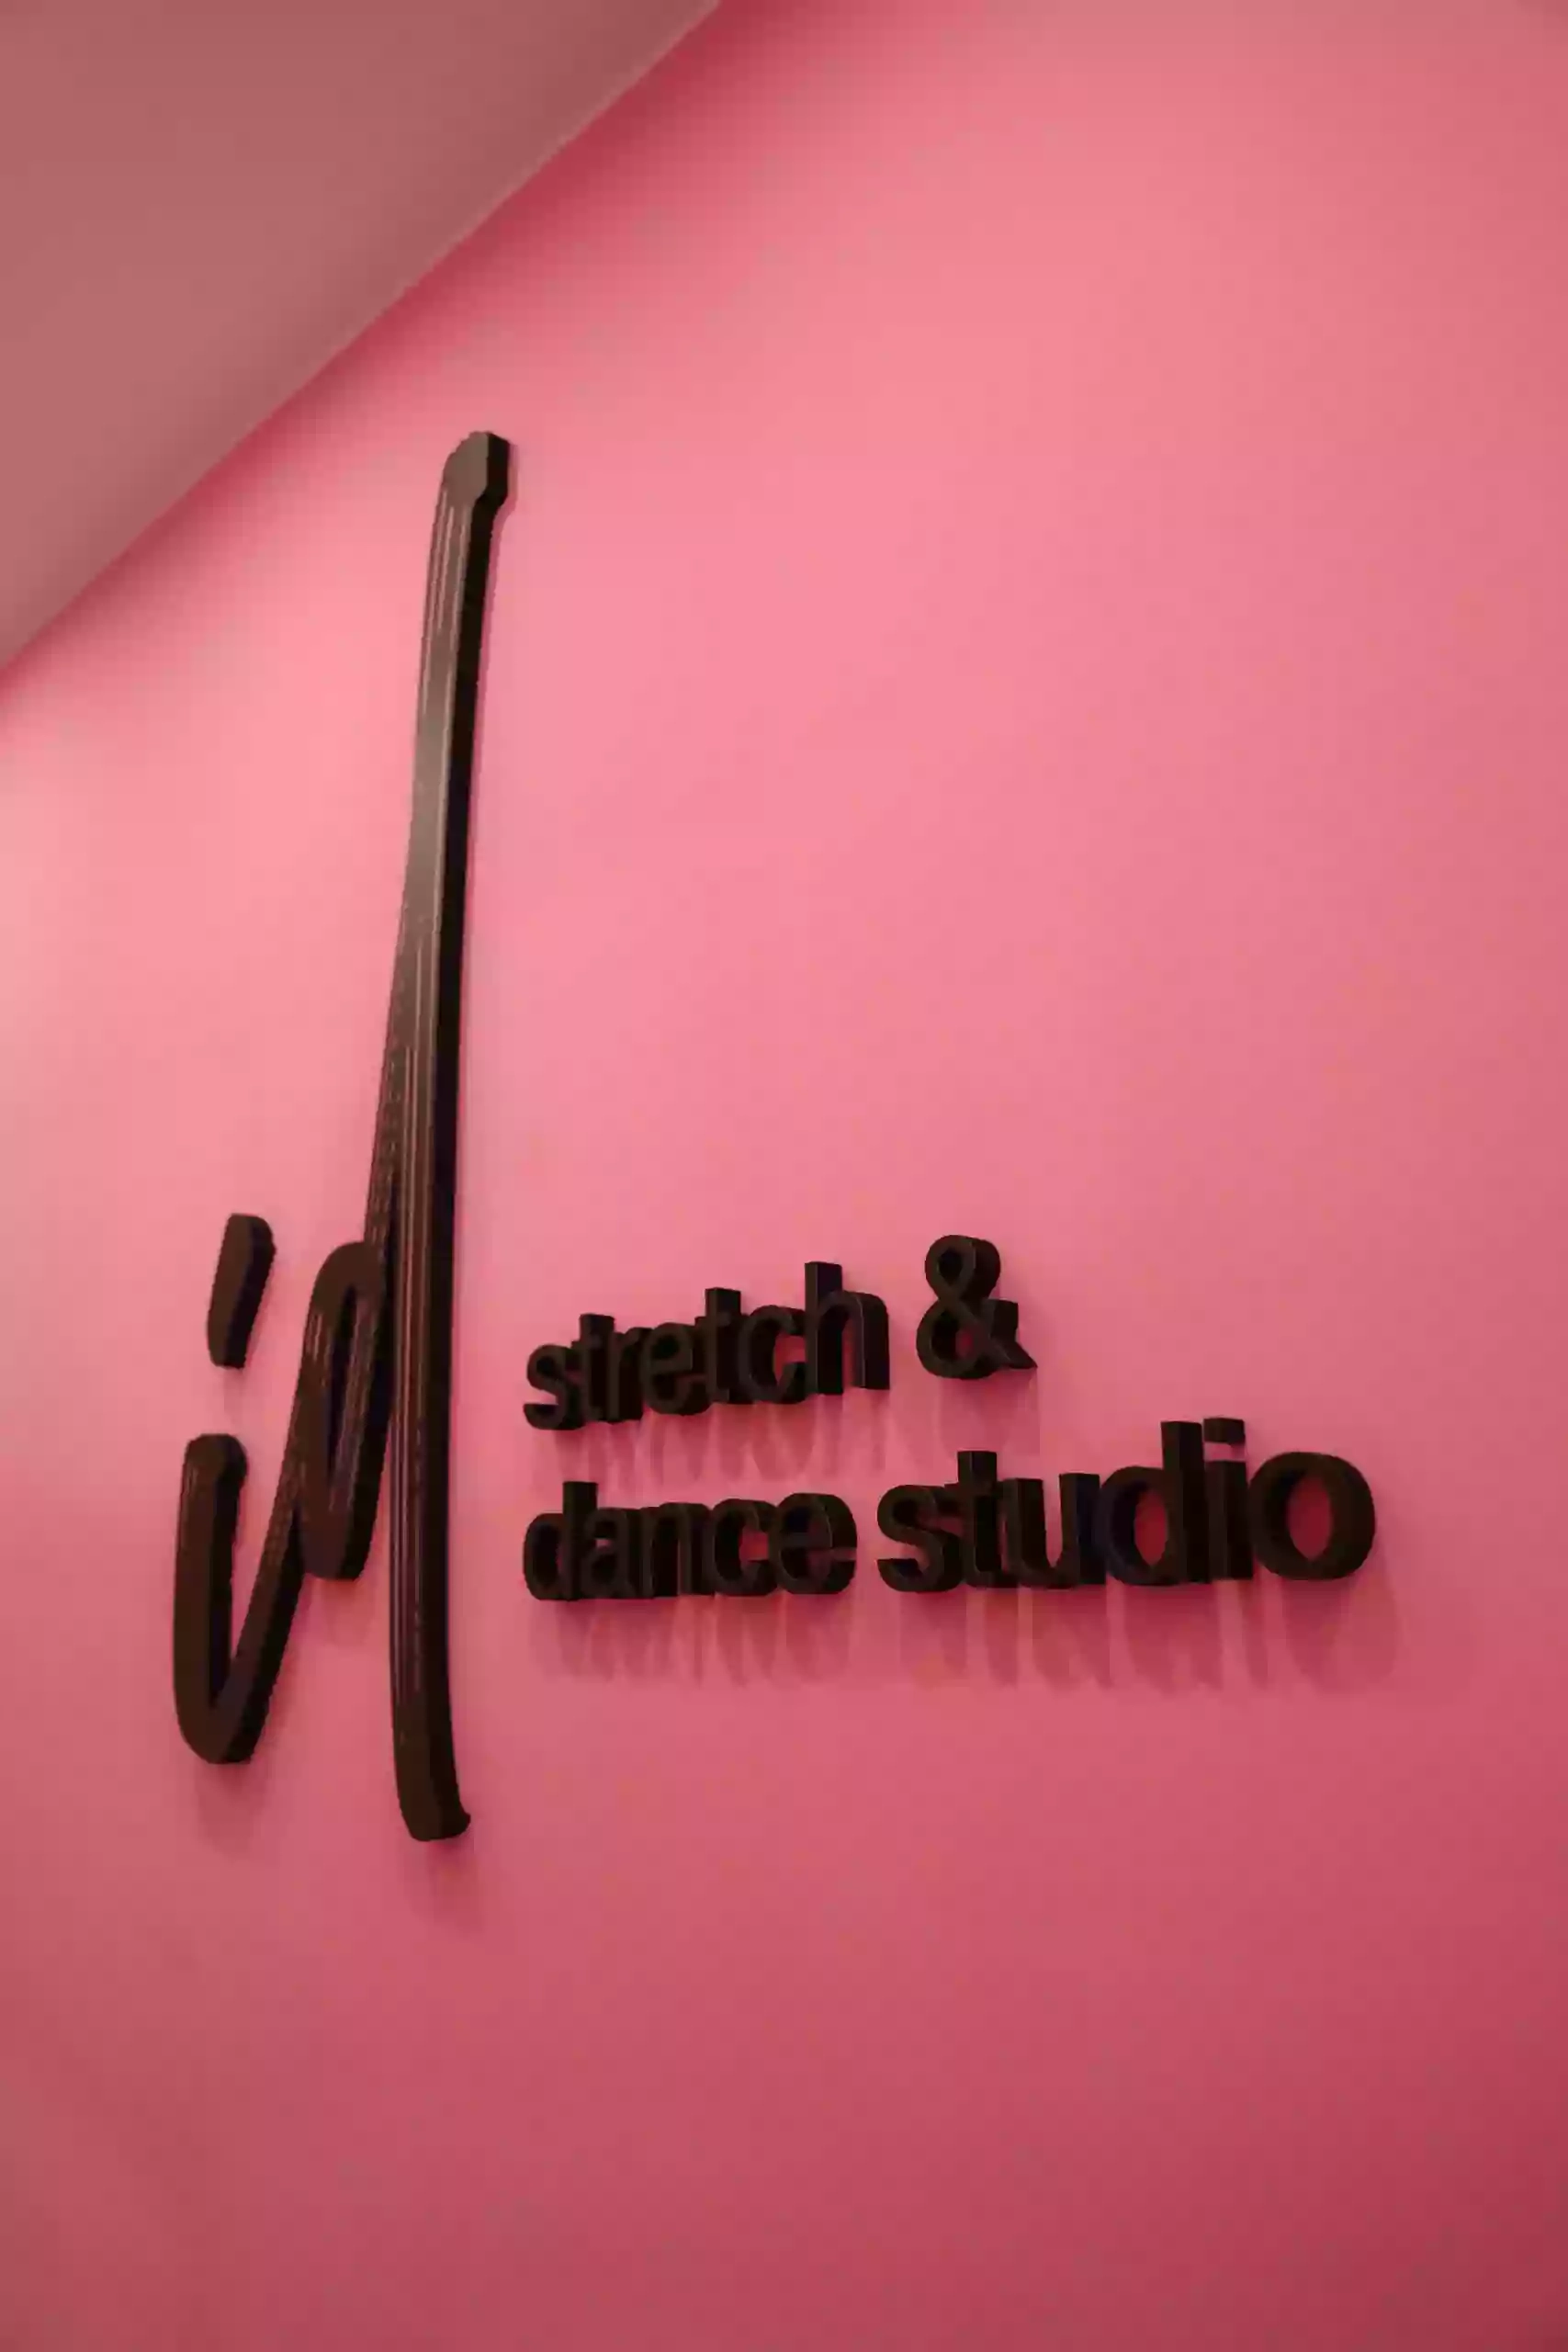 ID Stretching & Dance studio Milano